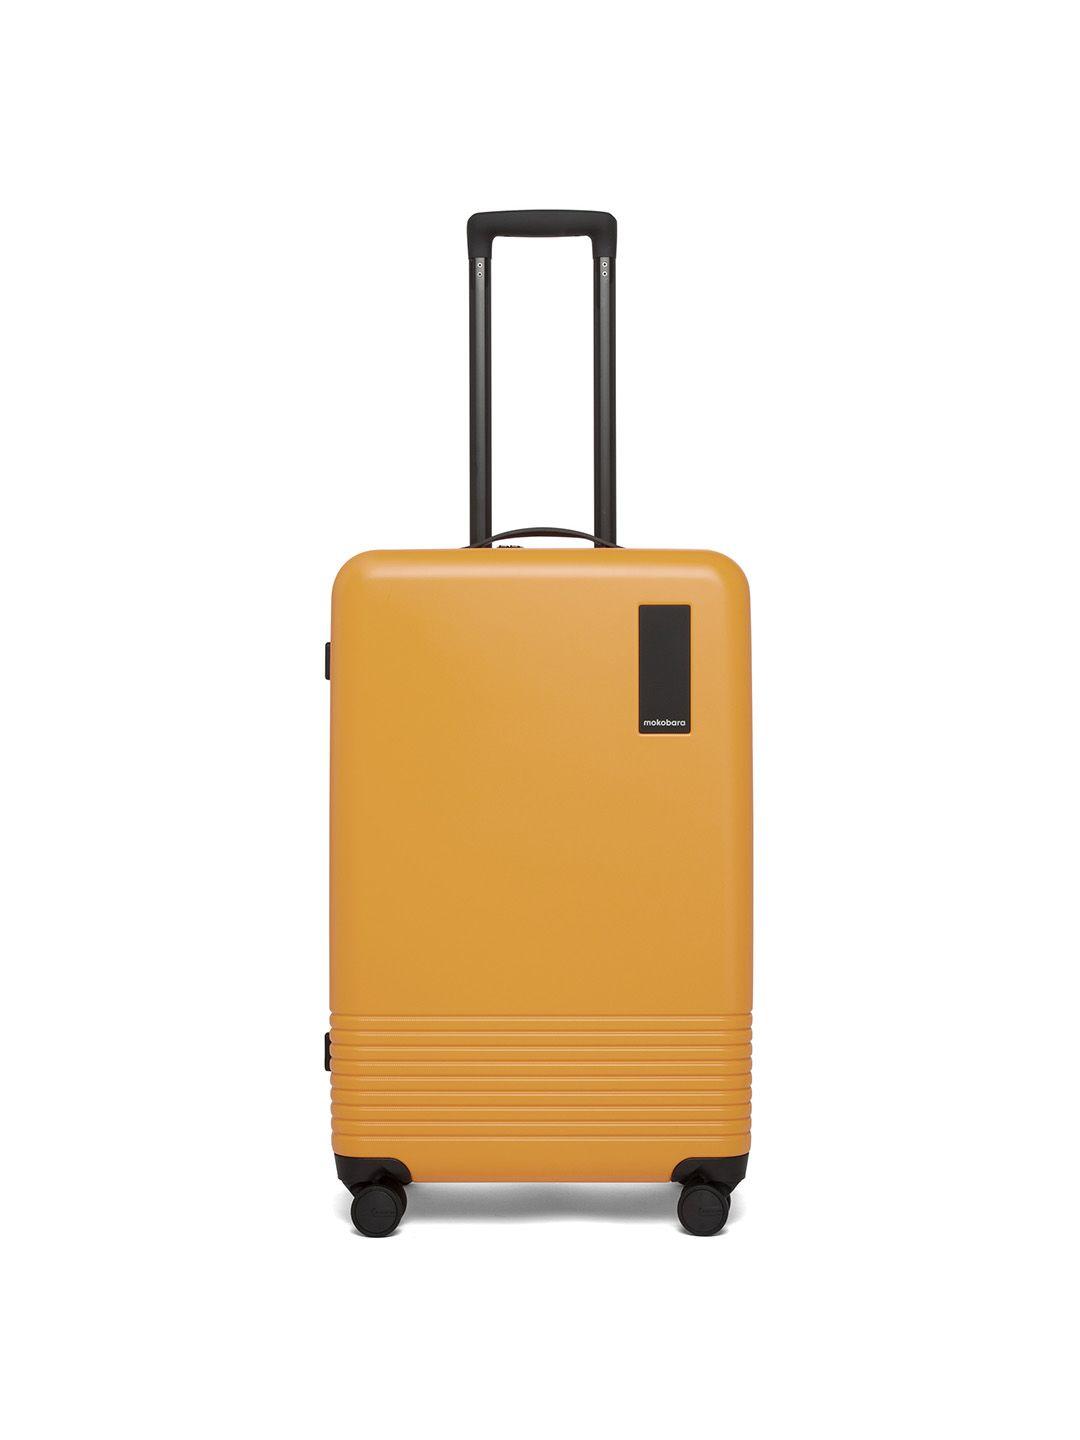 mokobara unisex yellow textured hard-sided medium trolley suitcase